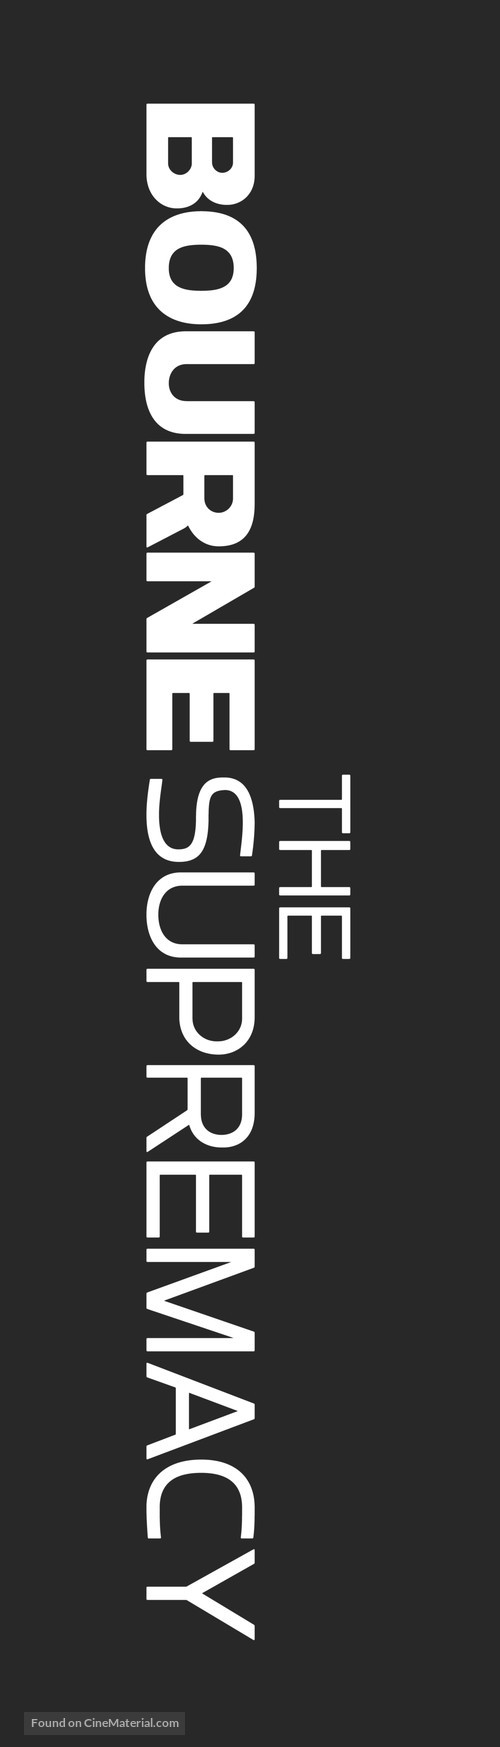 The Bourne Supremacy - Logo